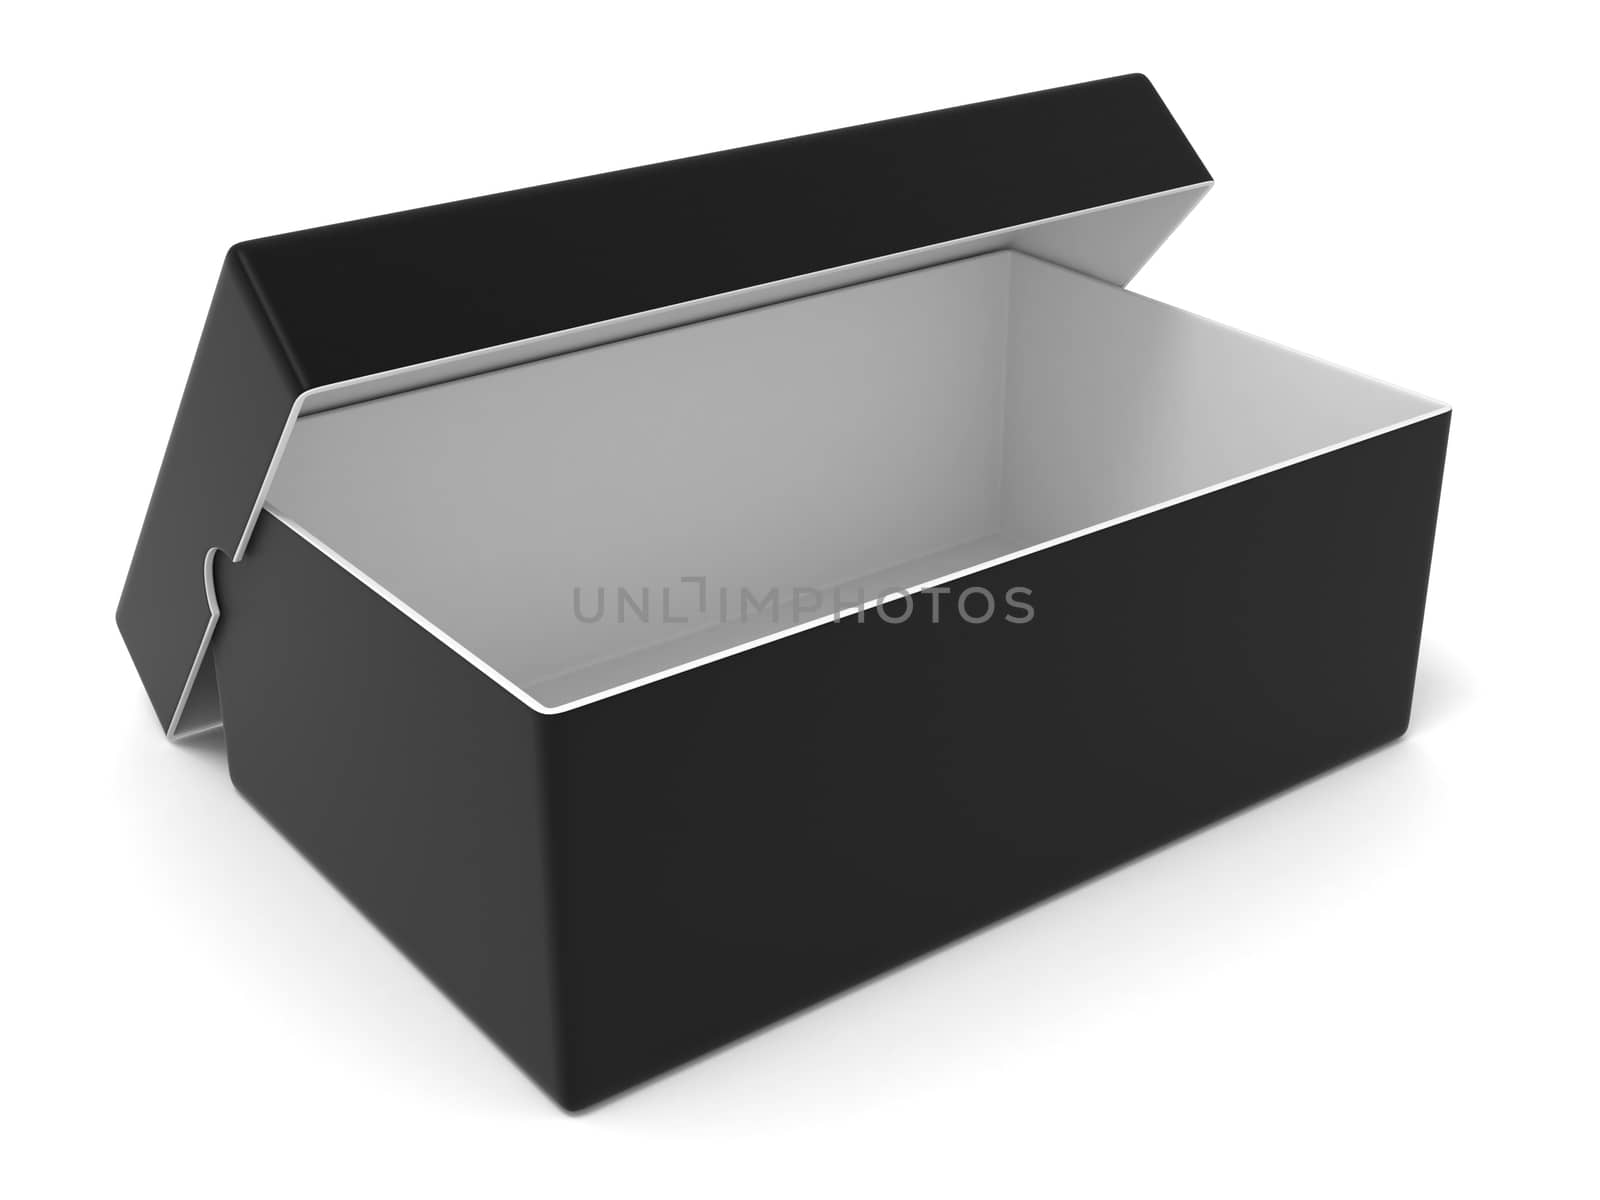 Empty black box, 3D render illustration isolated on white background